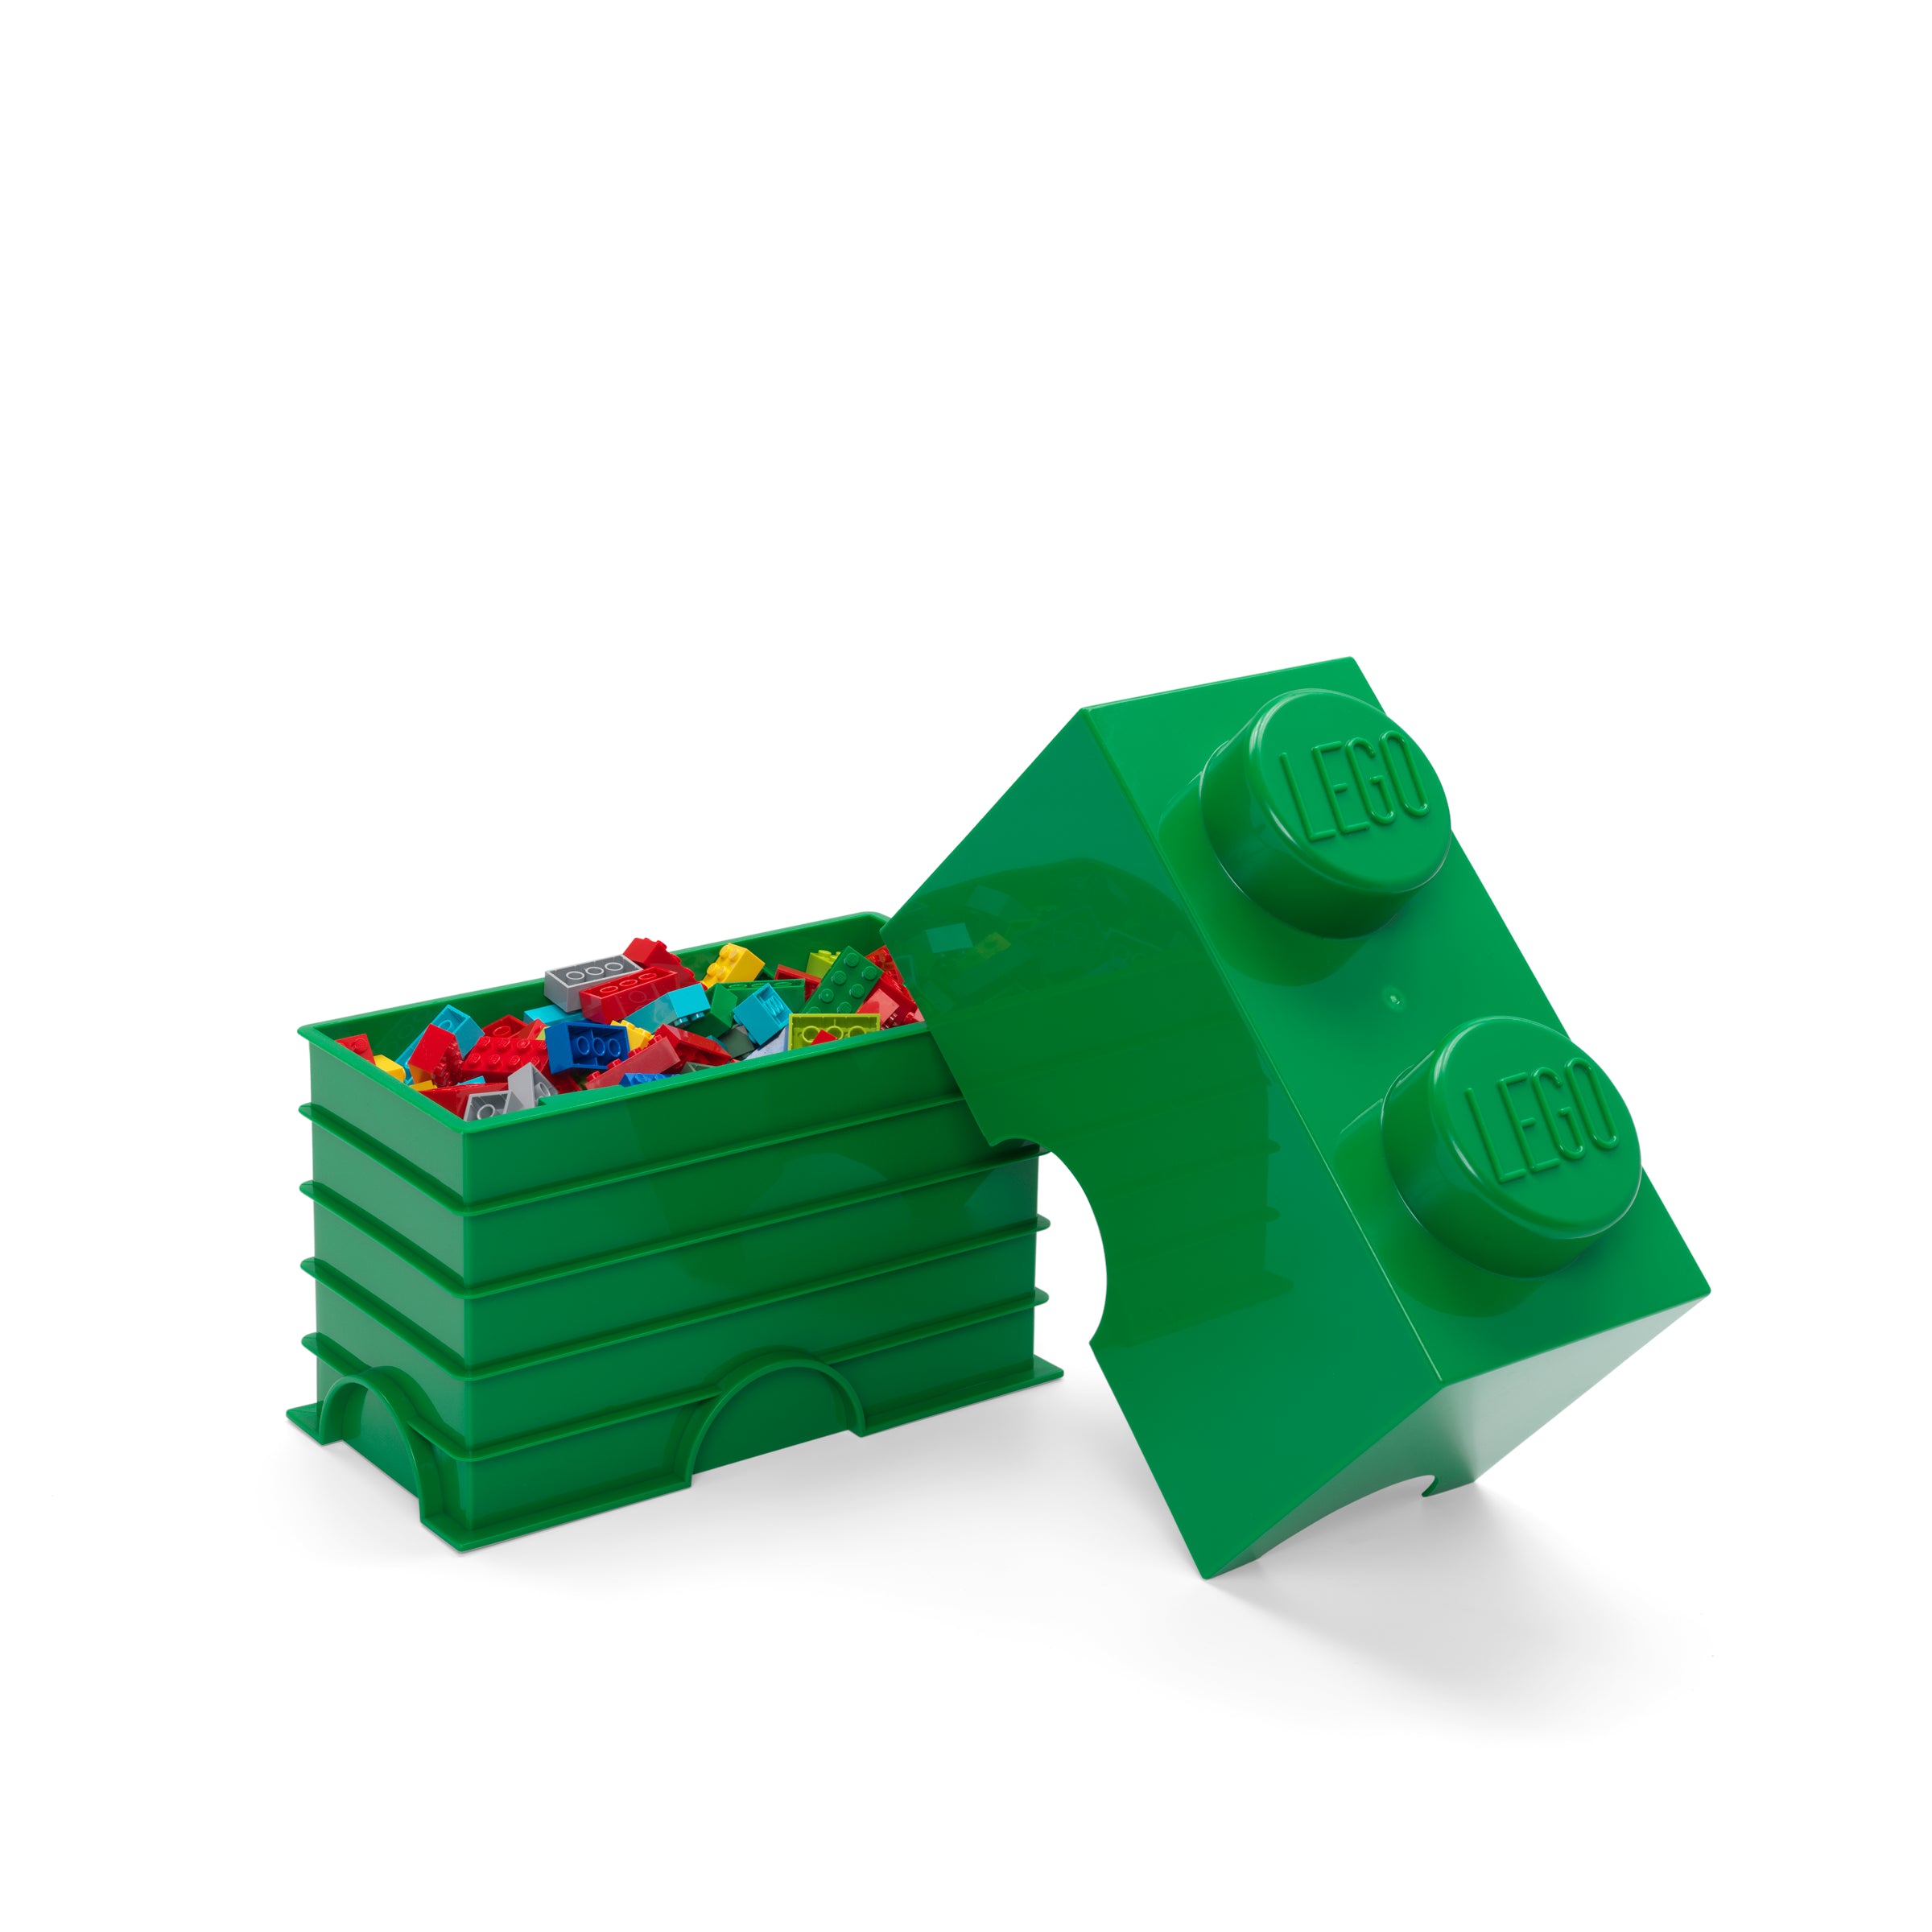 LEGO Brick Storage Box, Small - Green